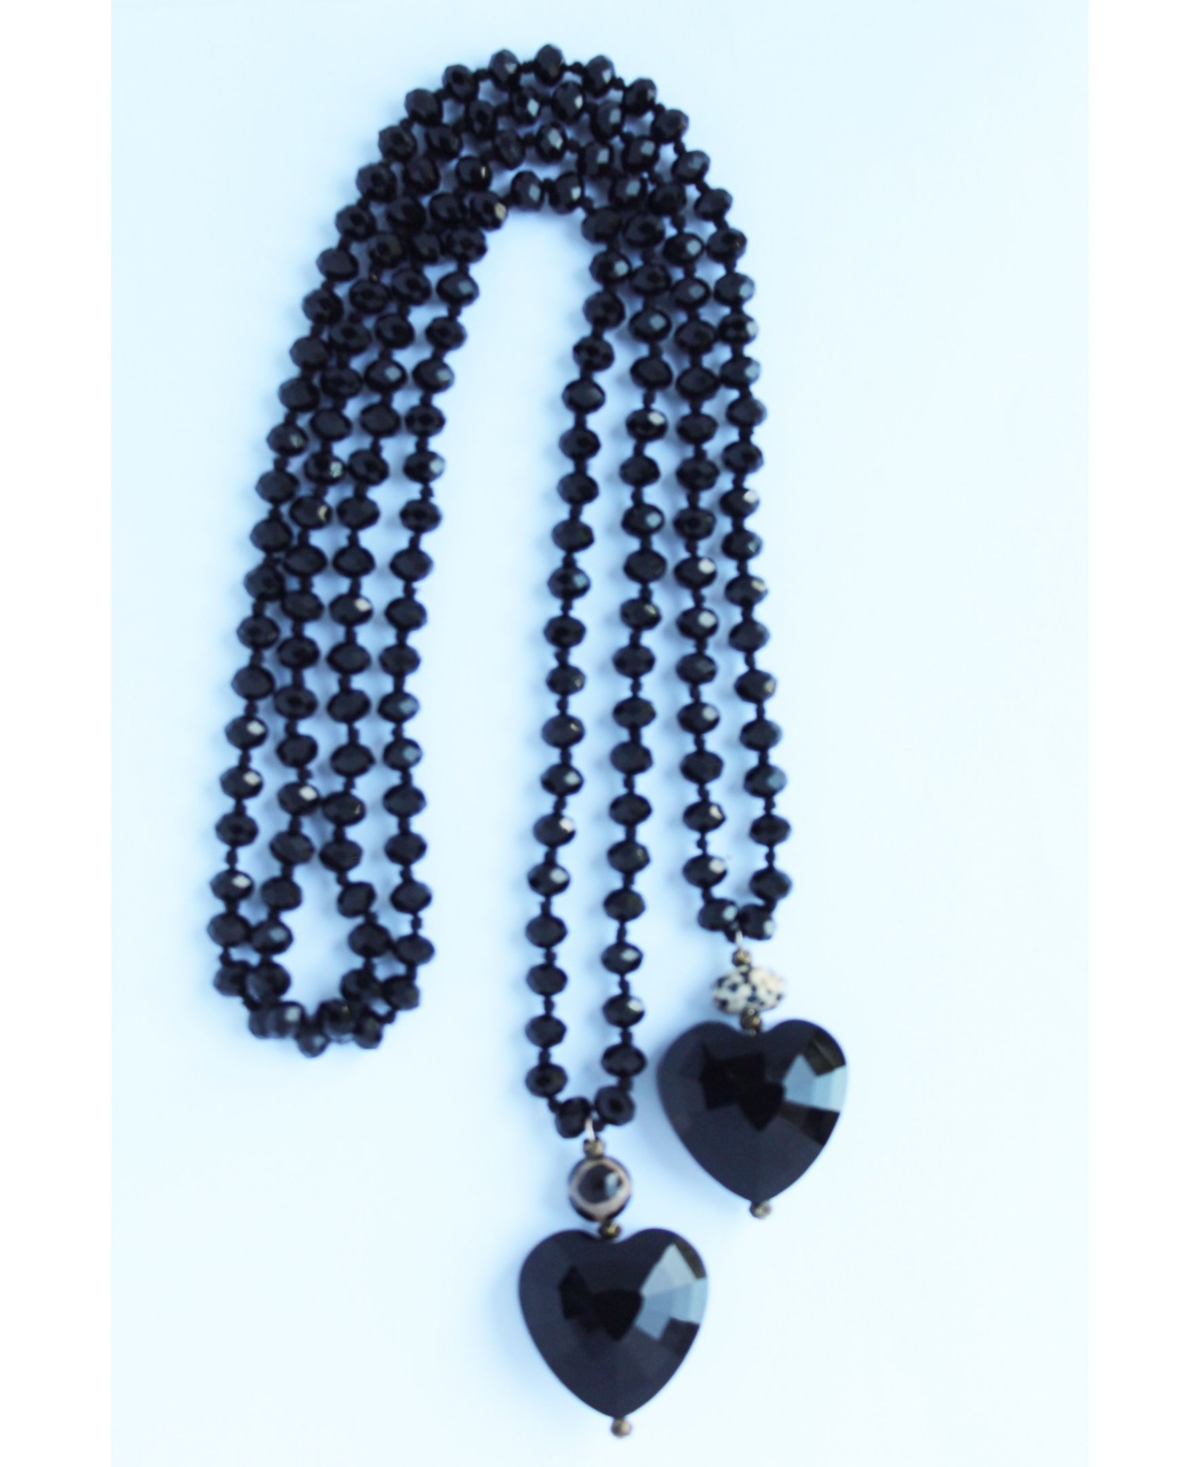 Cece Heart Necklace - Black